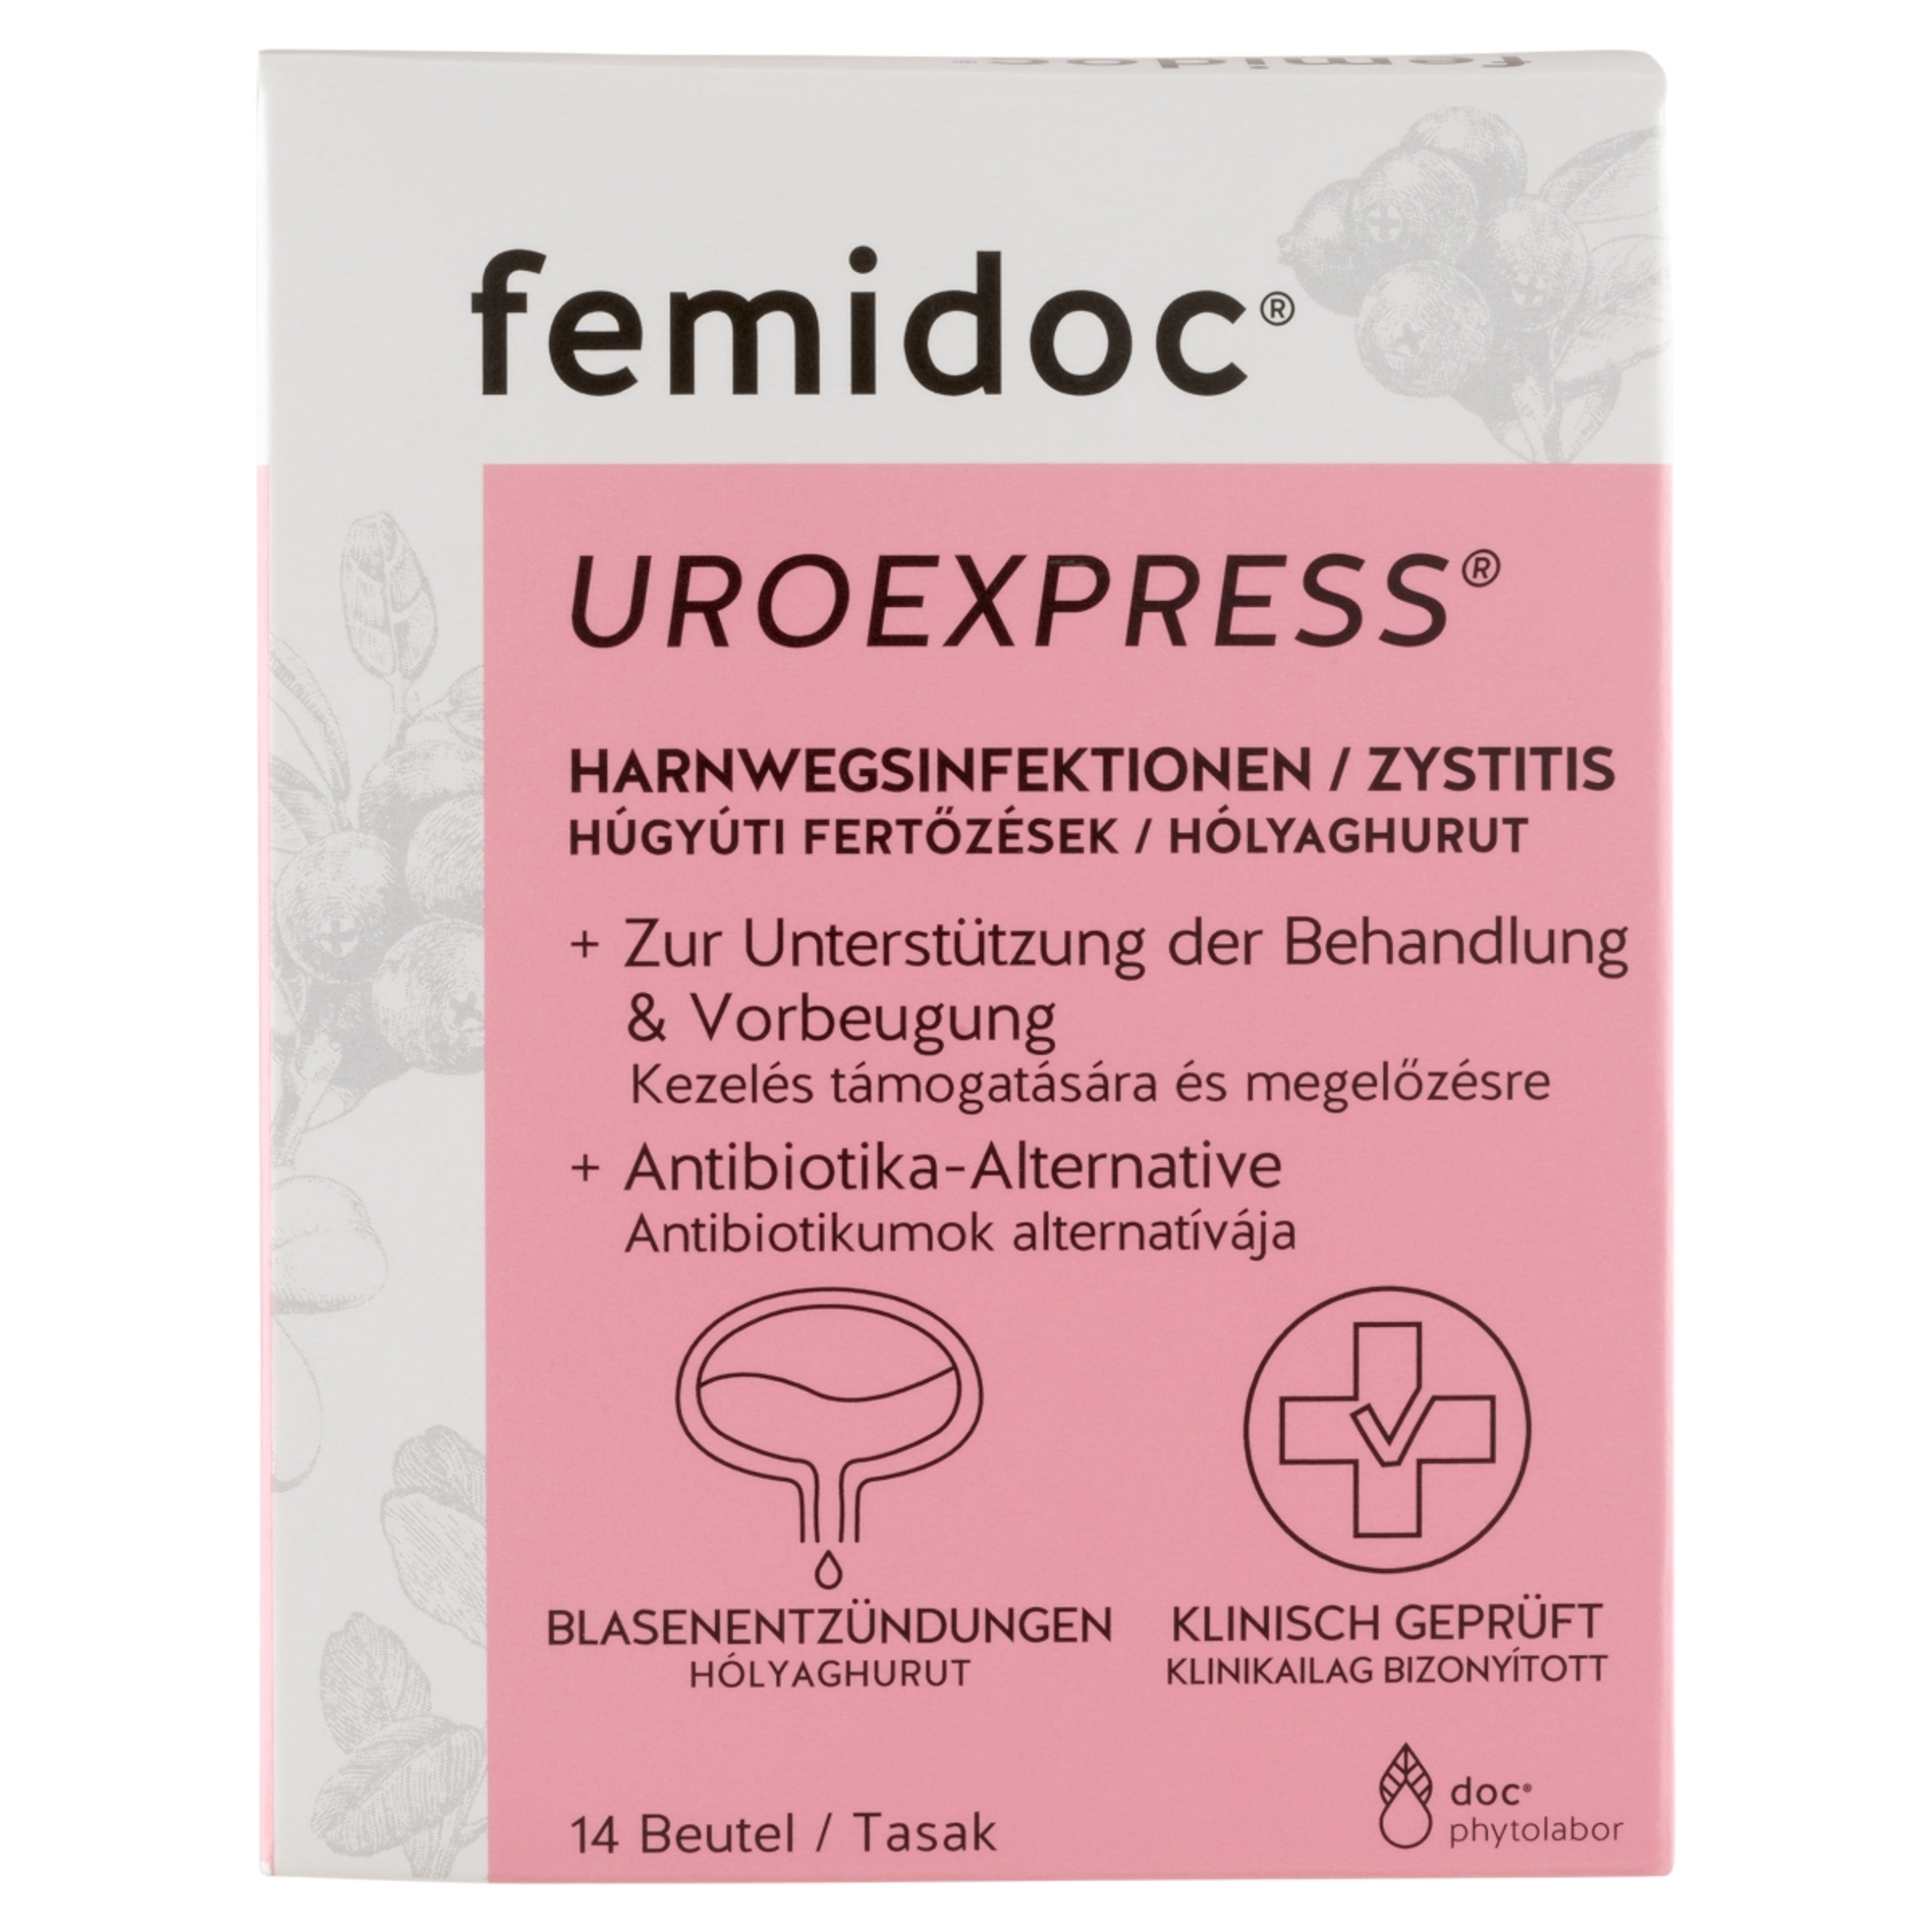 Femidoc Uroexpress por - 14 db-2